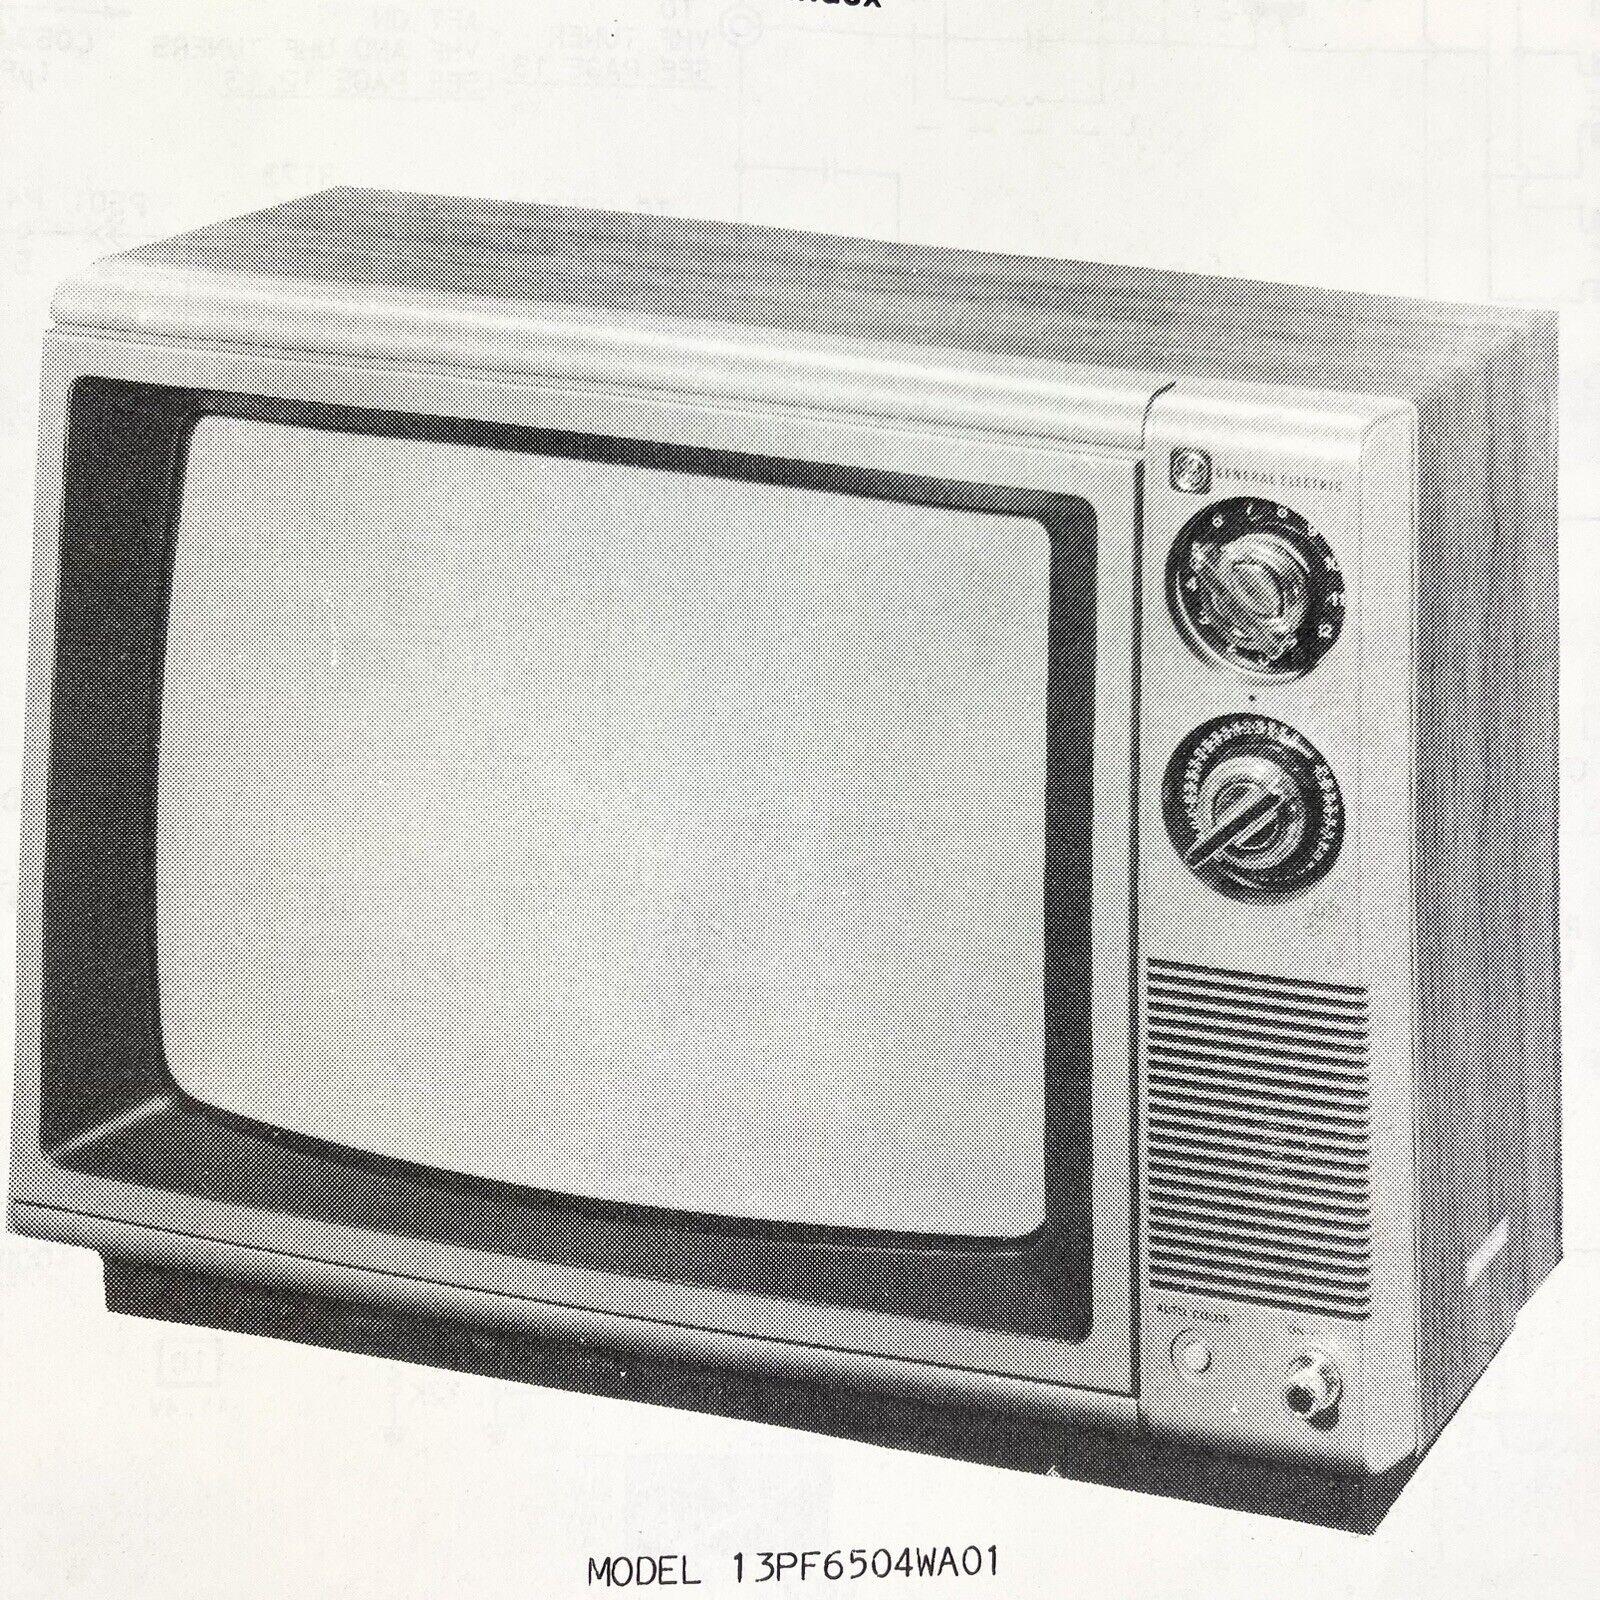 Vintage Original 1987 GE TV 13PF6500WA01 6504WA01 Wire Schematic Service Manual